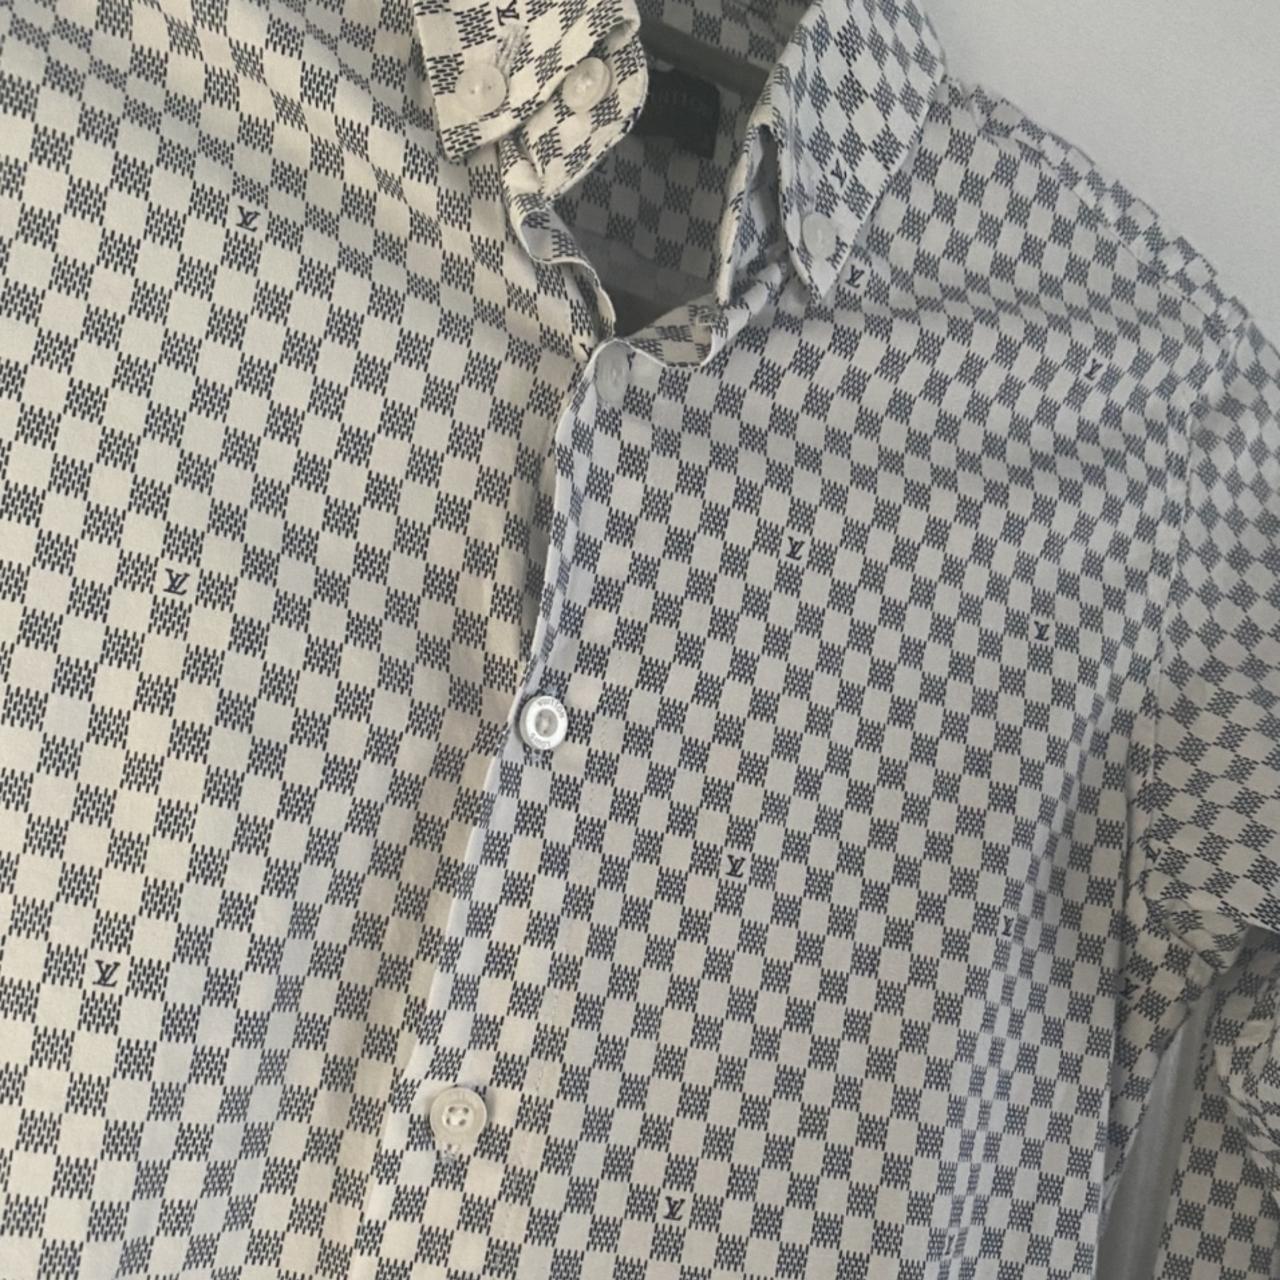 Louis Vuitton long sleeve polo shirt Size - Depop